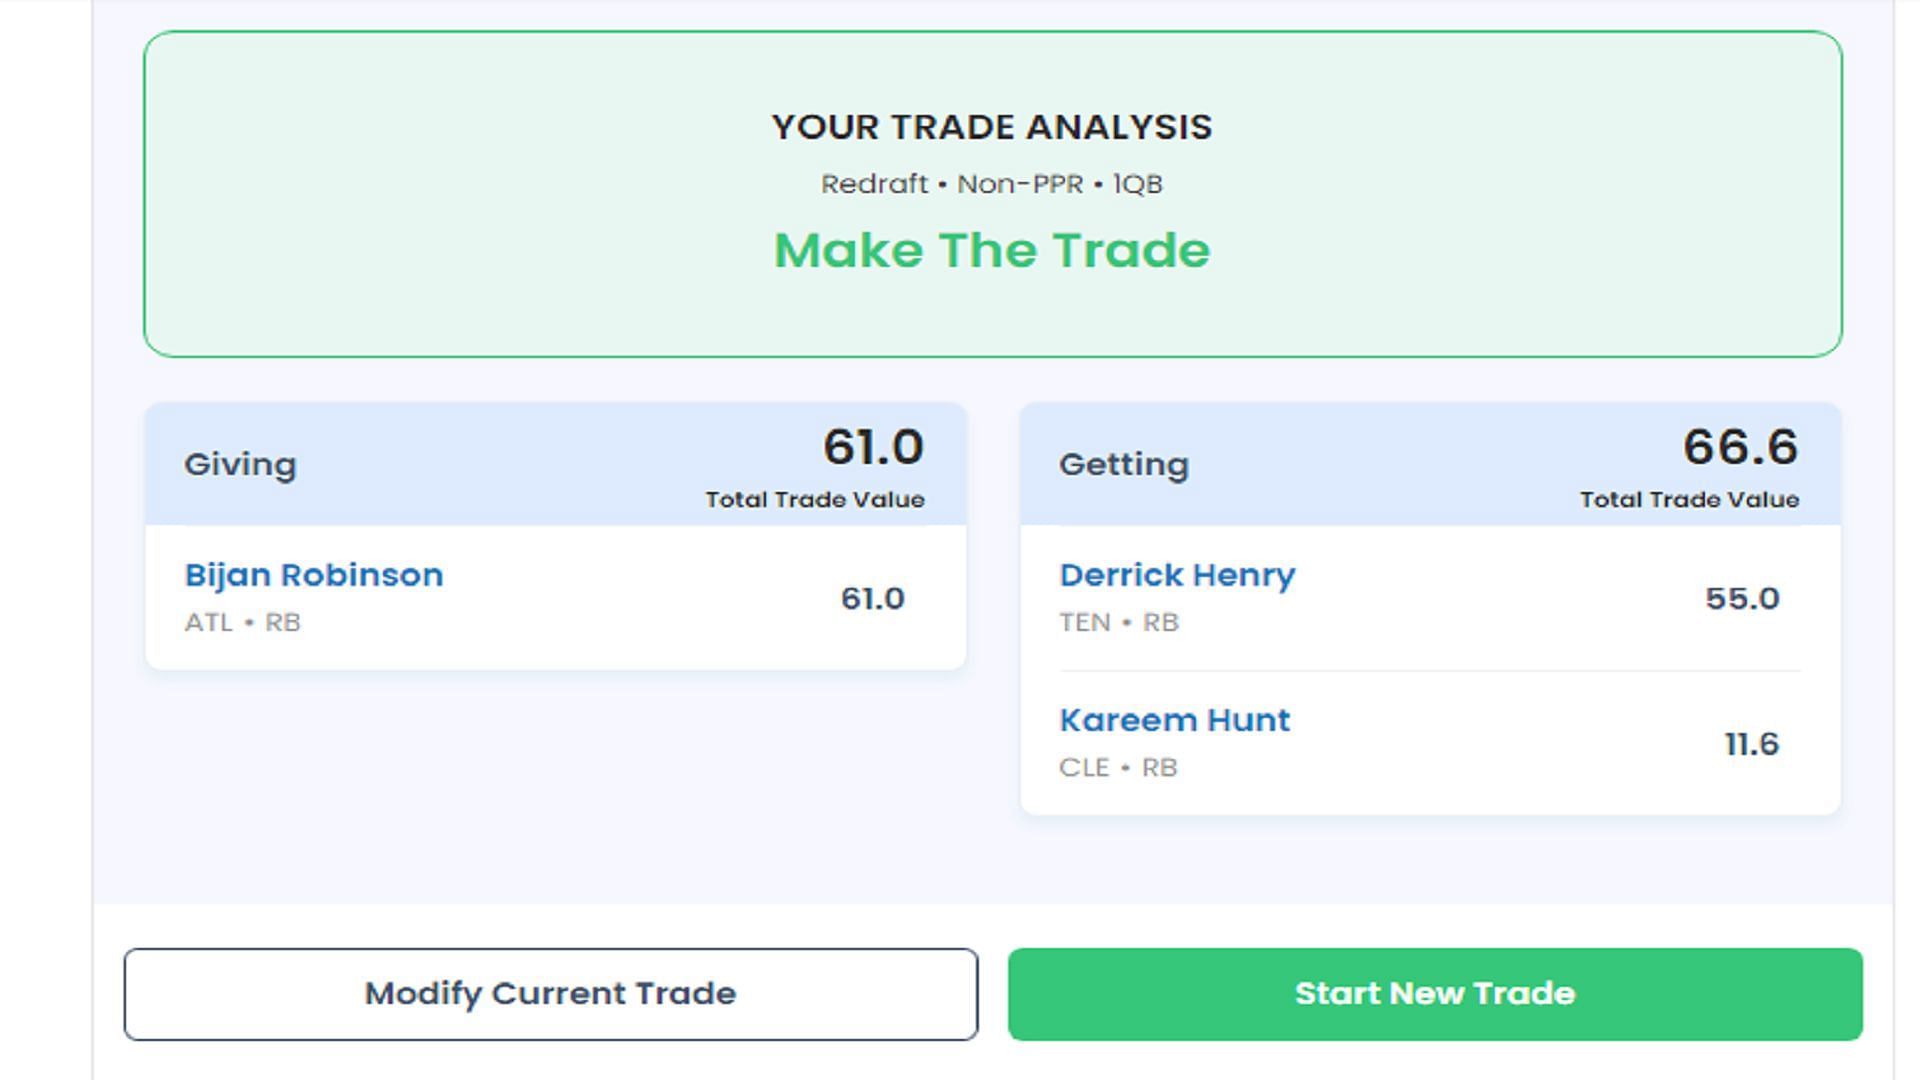 Trade results for Derrick Henry and Kareem Hunt